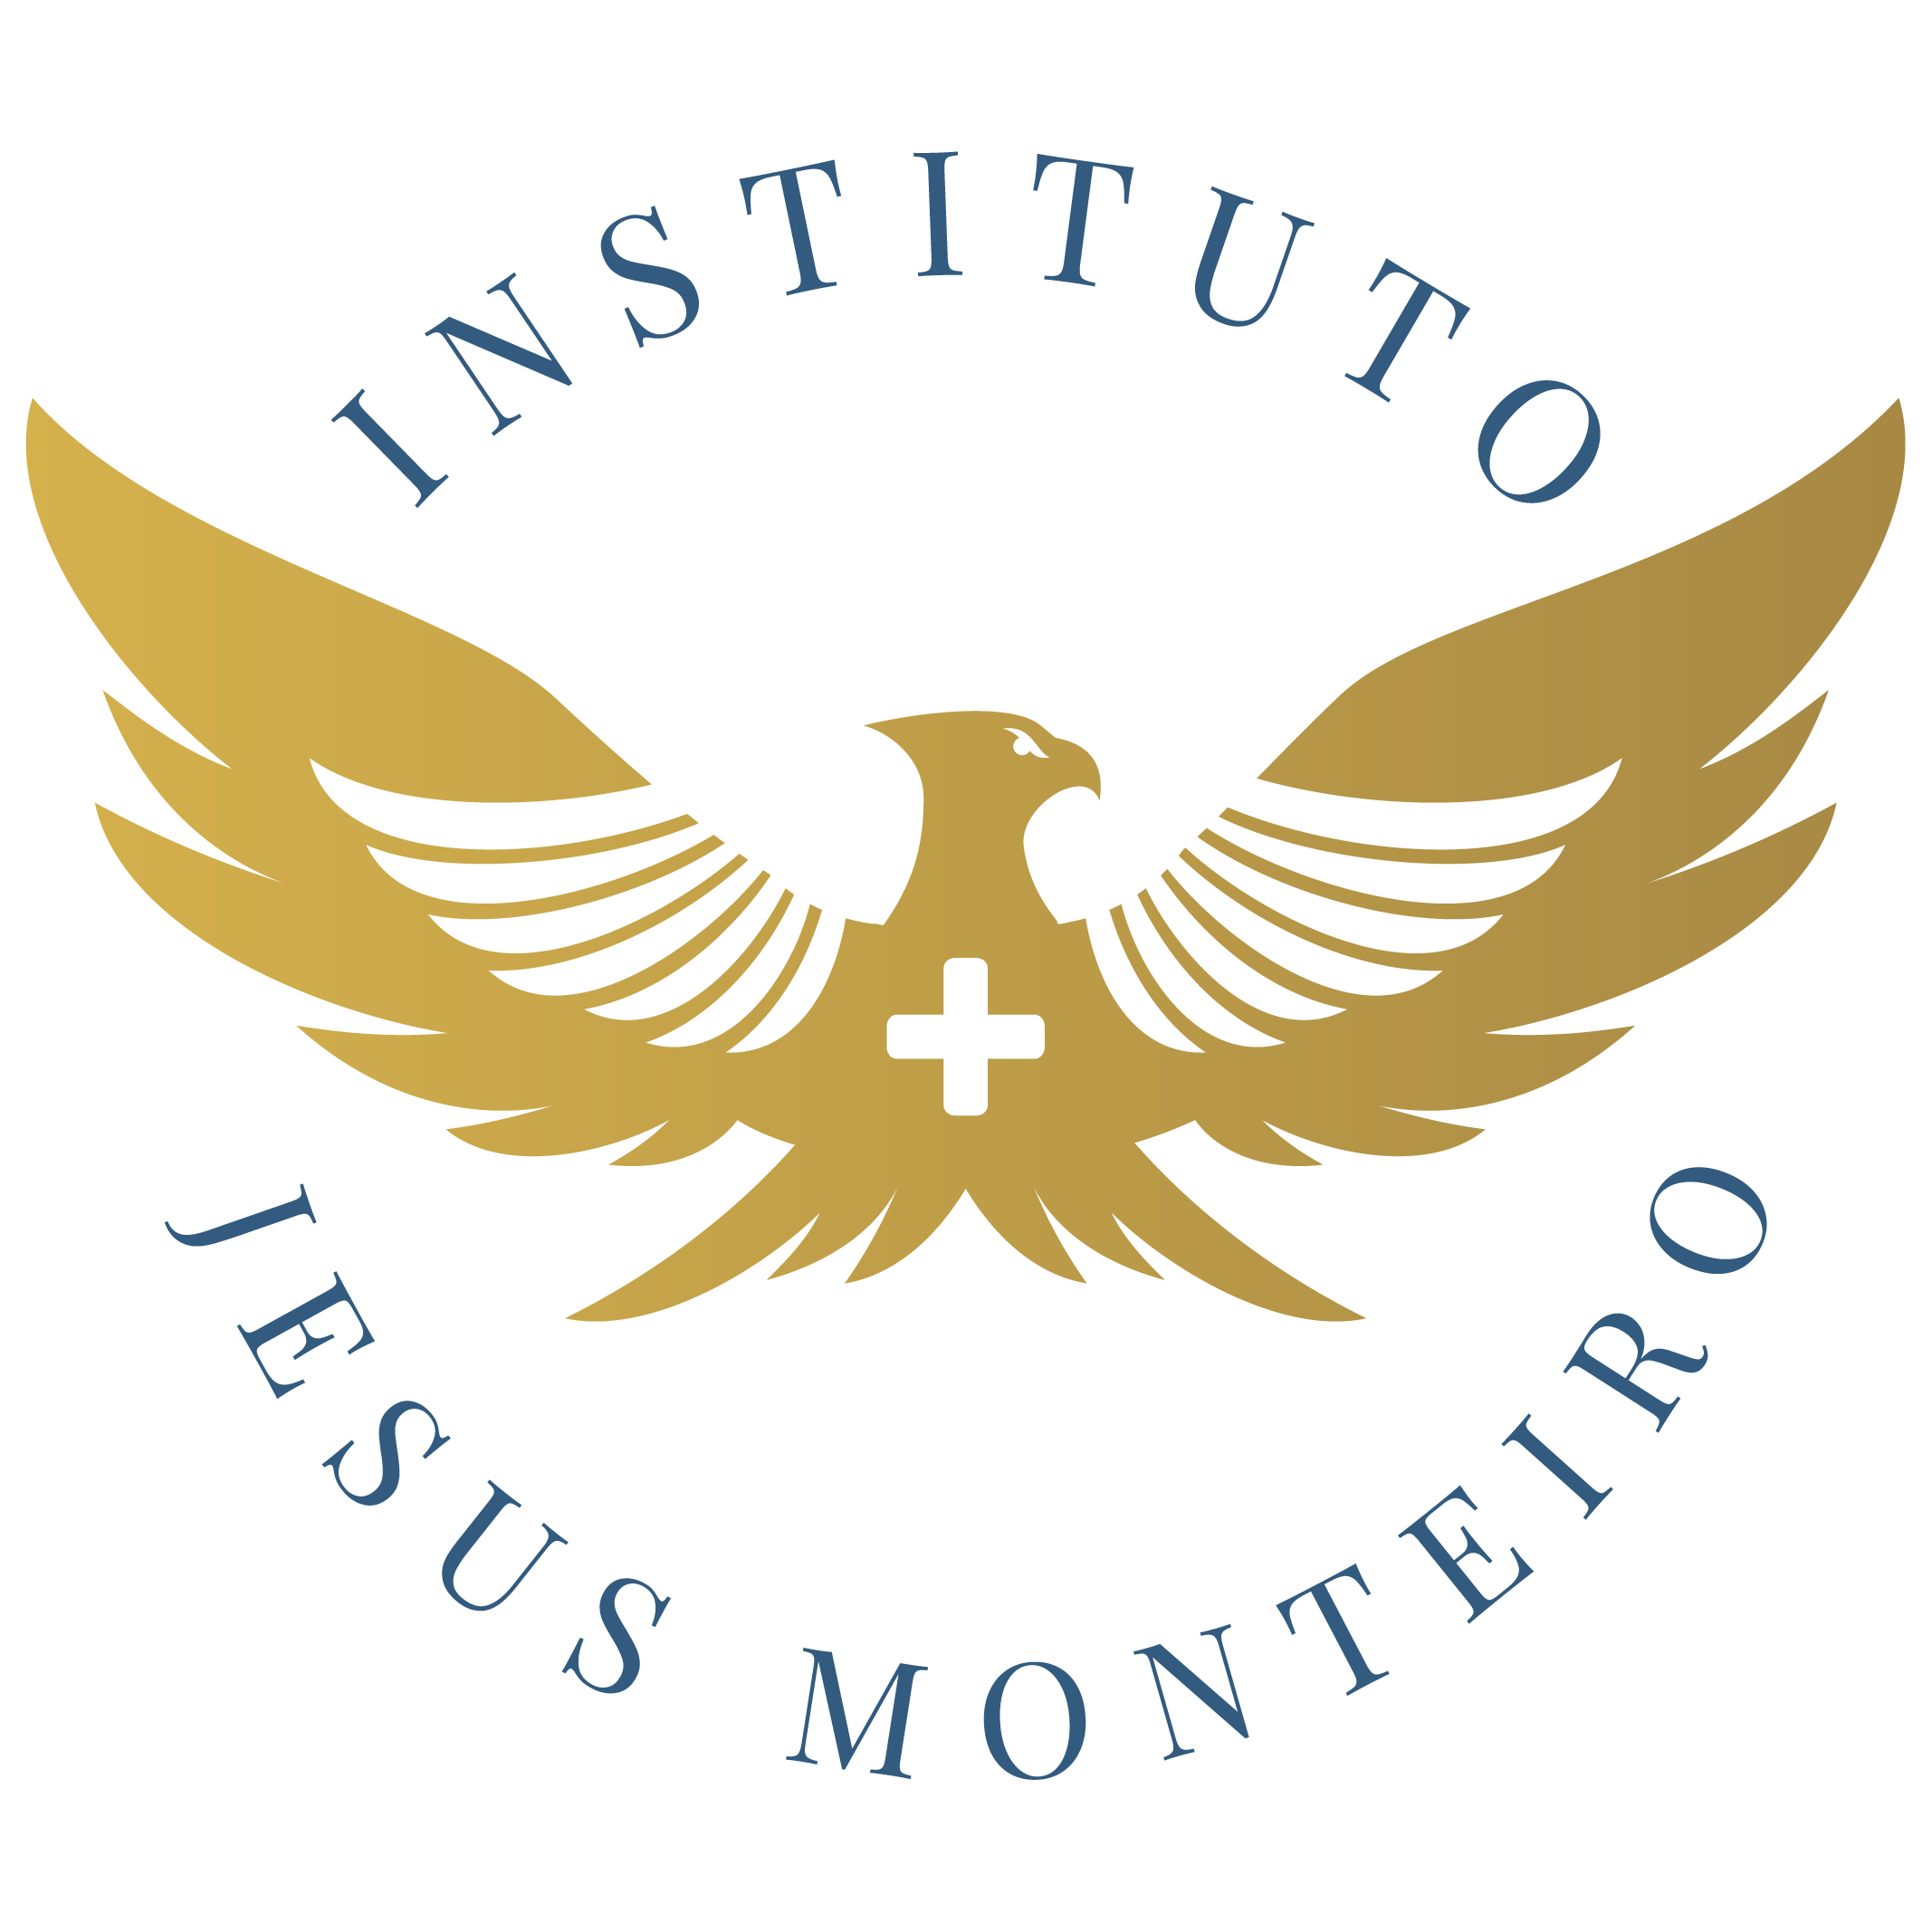 Instituto Jesus Monteiro - Estude no IJM